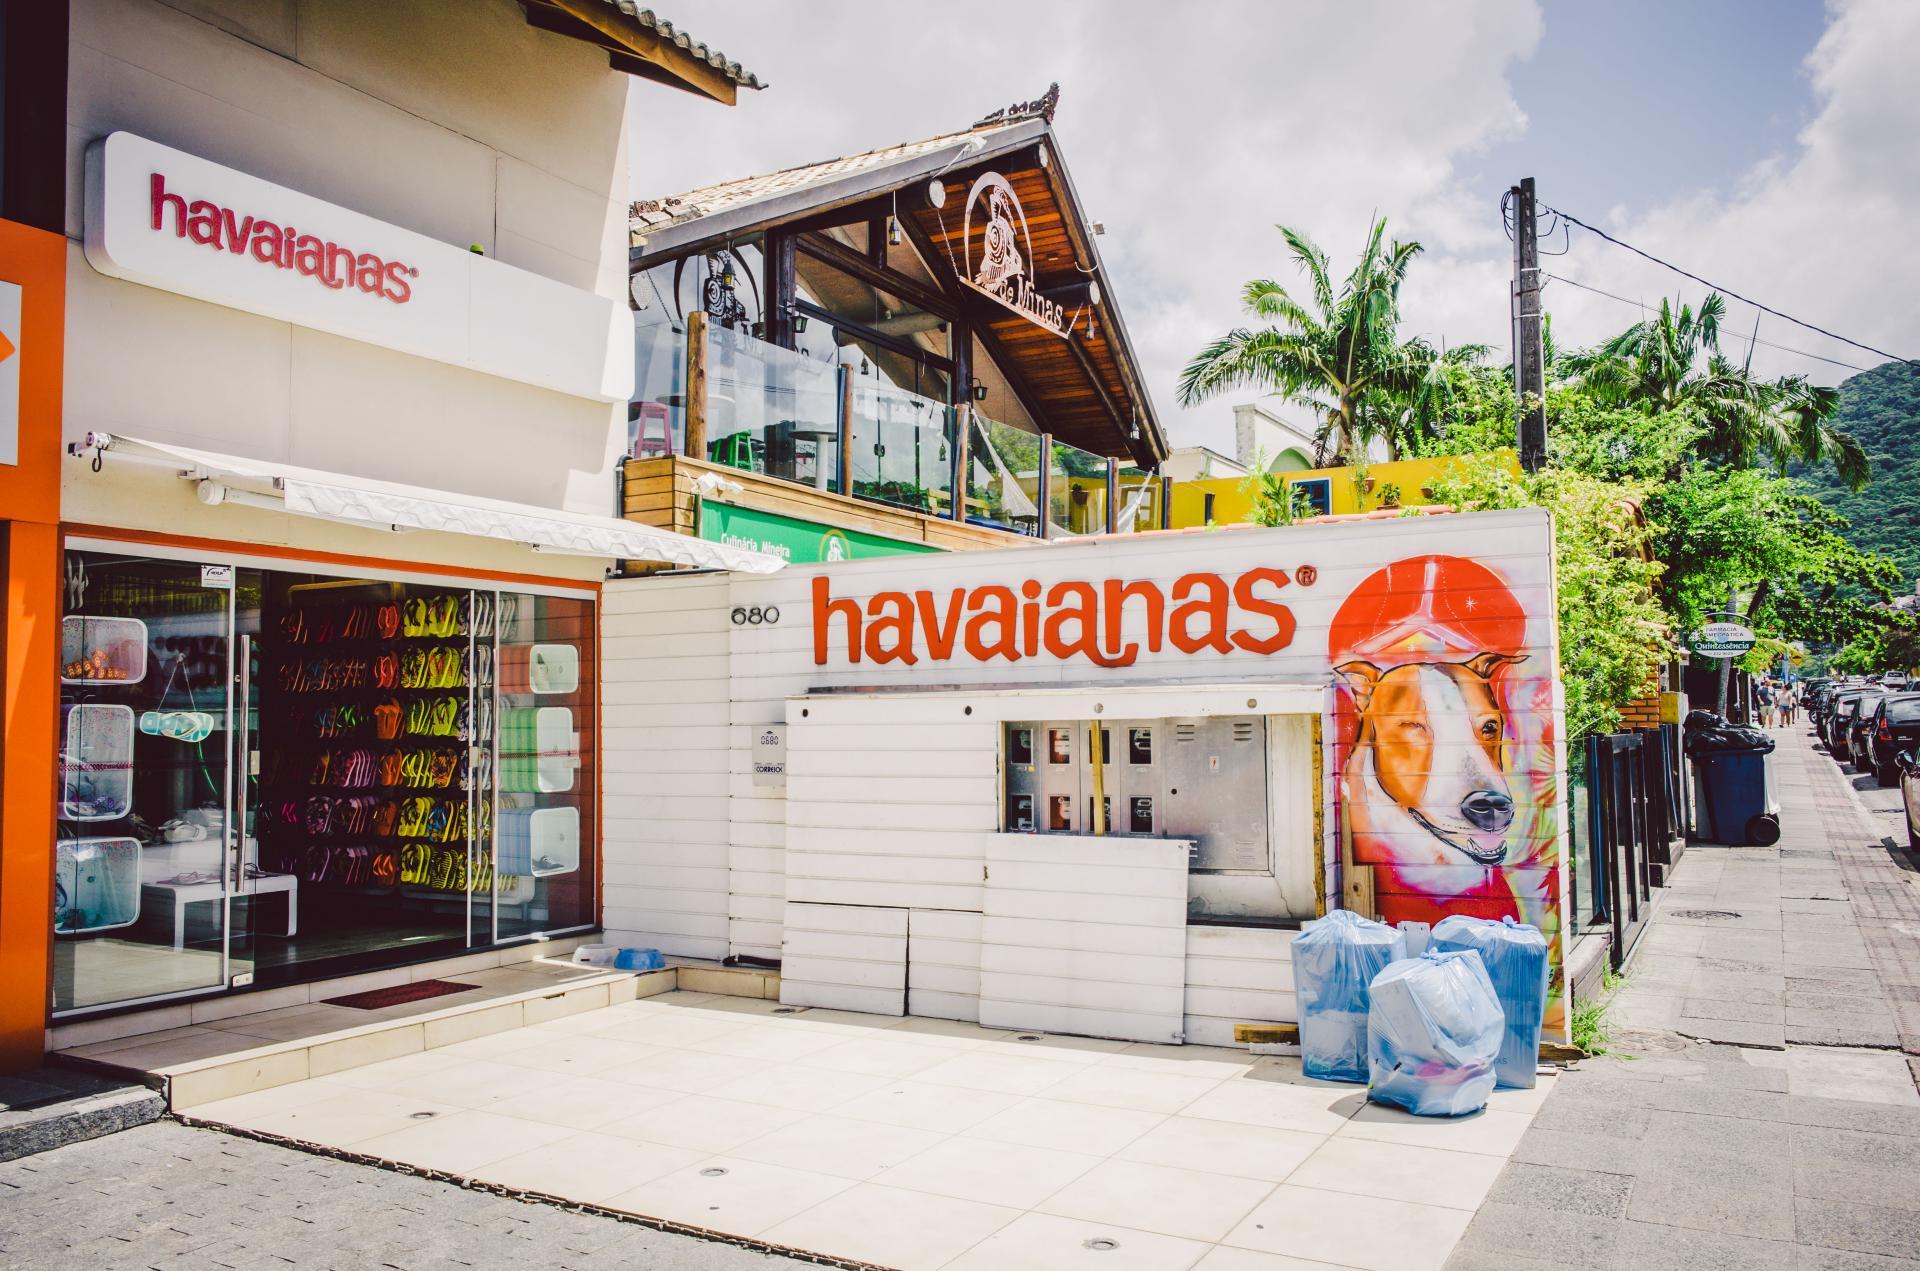 A Havaianas store in Florianopolis.